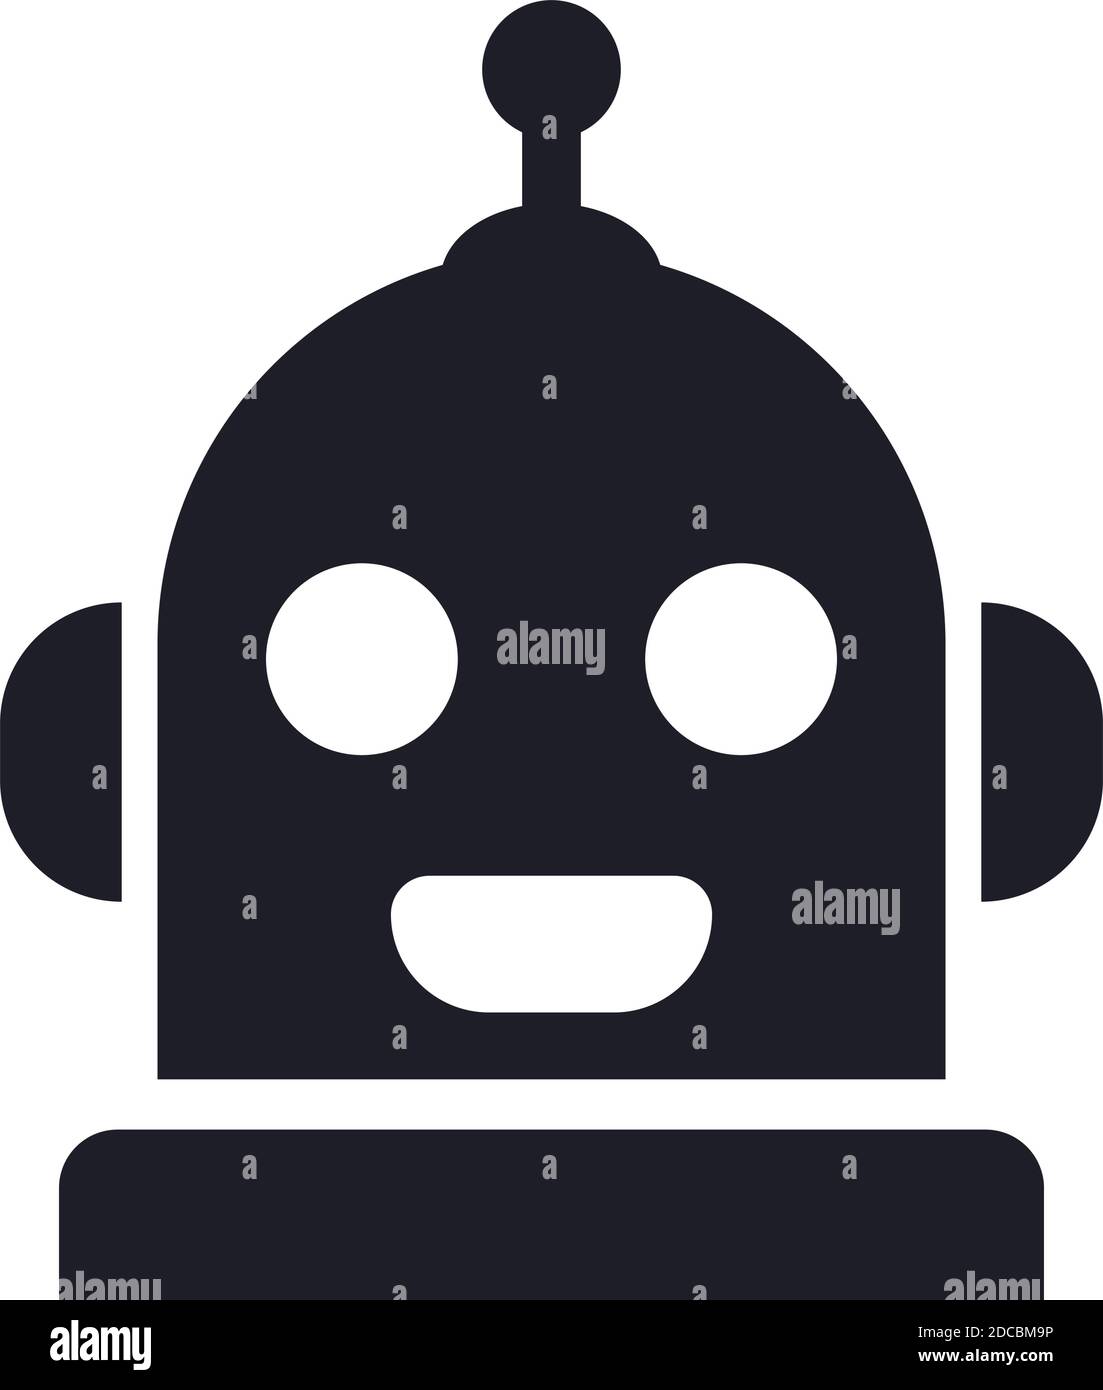 Freundliche Roboter Schädel Roboter Kopf Symbol oder AI Avatar Symbol vektorgrafik Stock Vektor